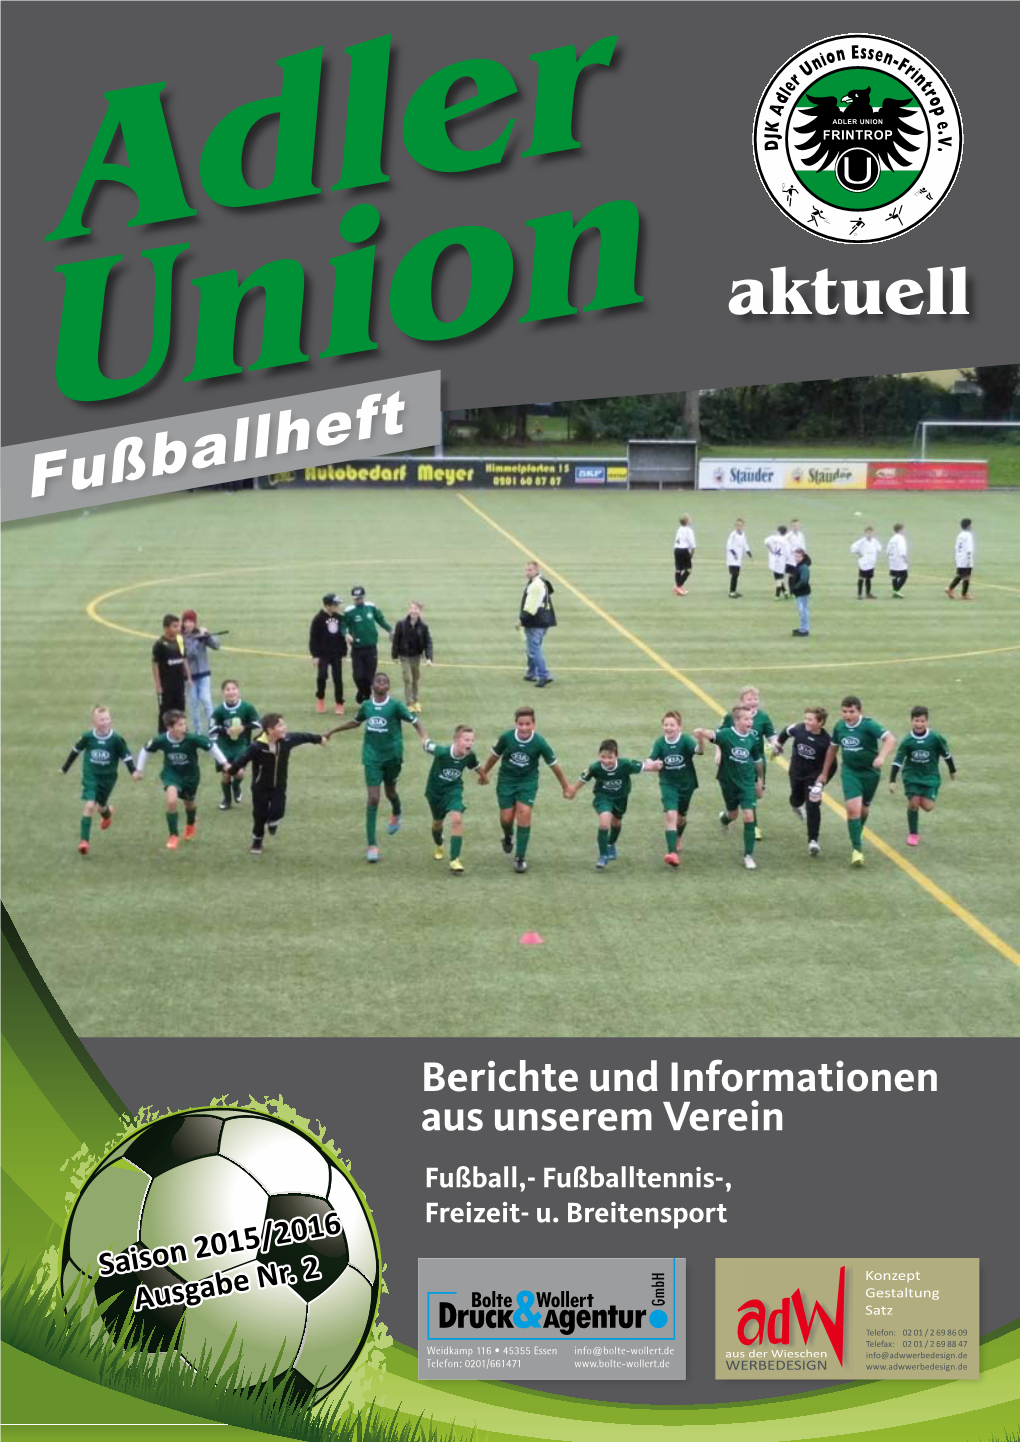 2015-16 Adlerunion Heft Nr.2